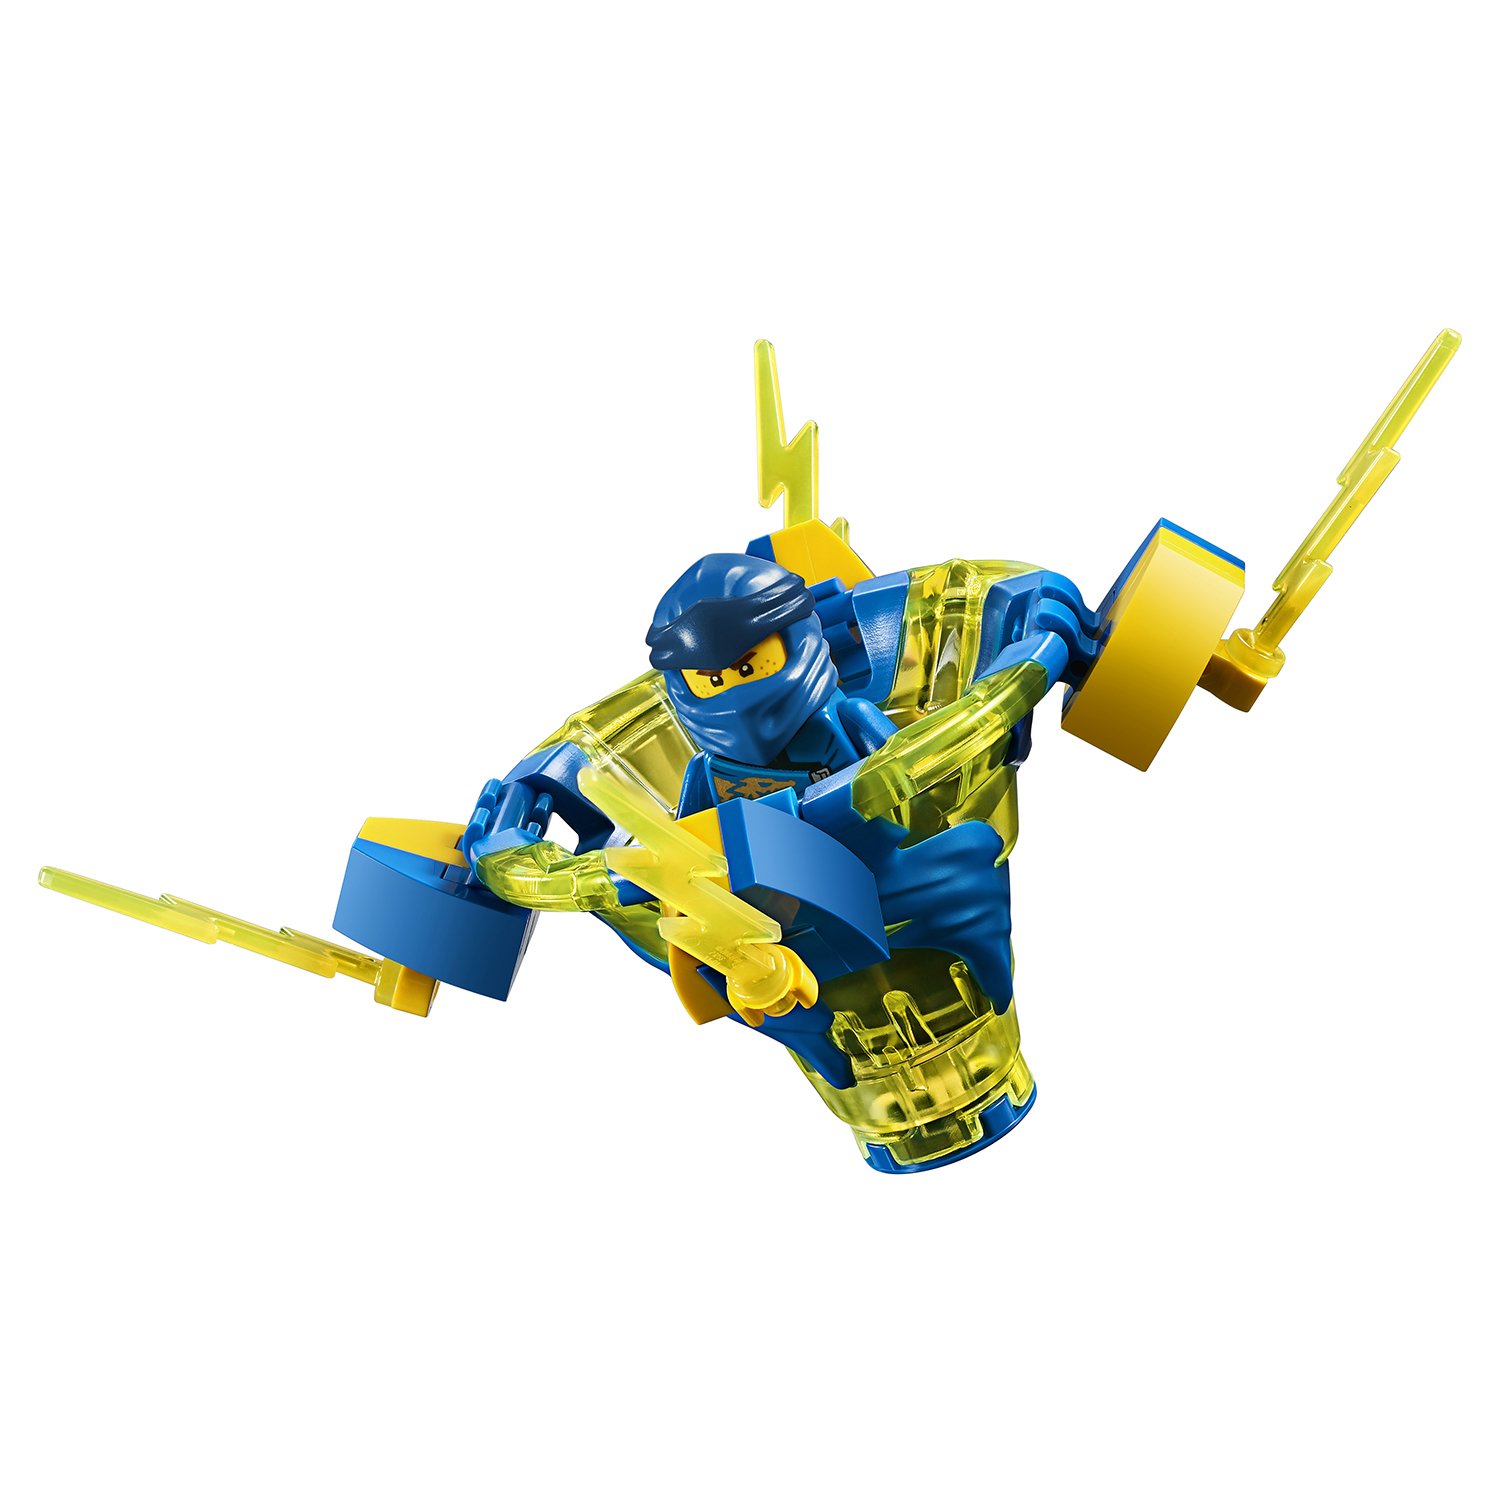 Lego Ninjago 70660 Джей мастер Кружитцу